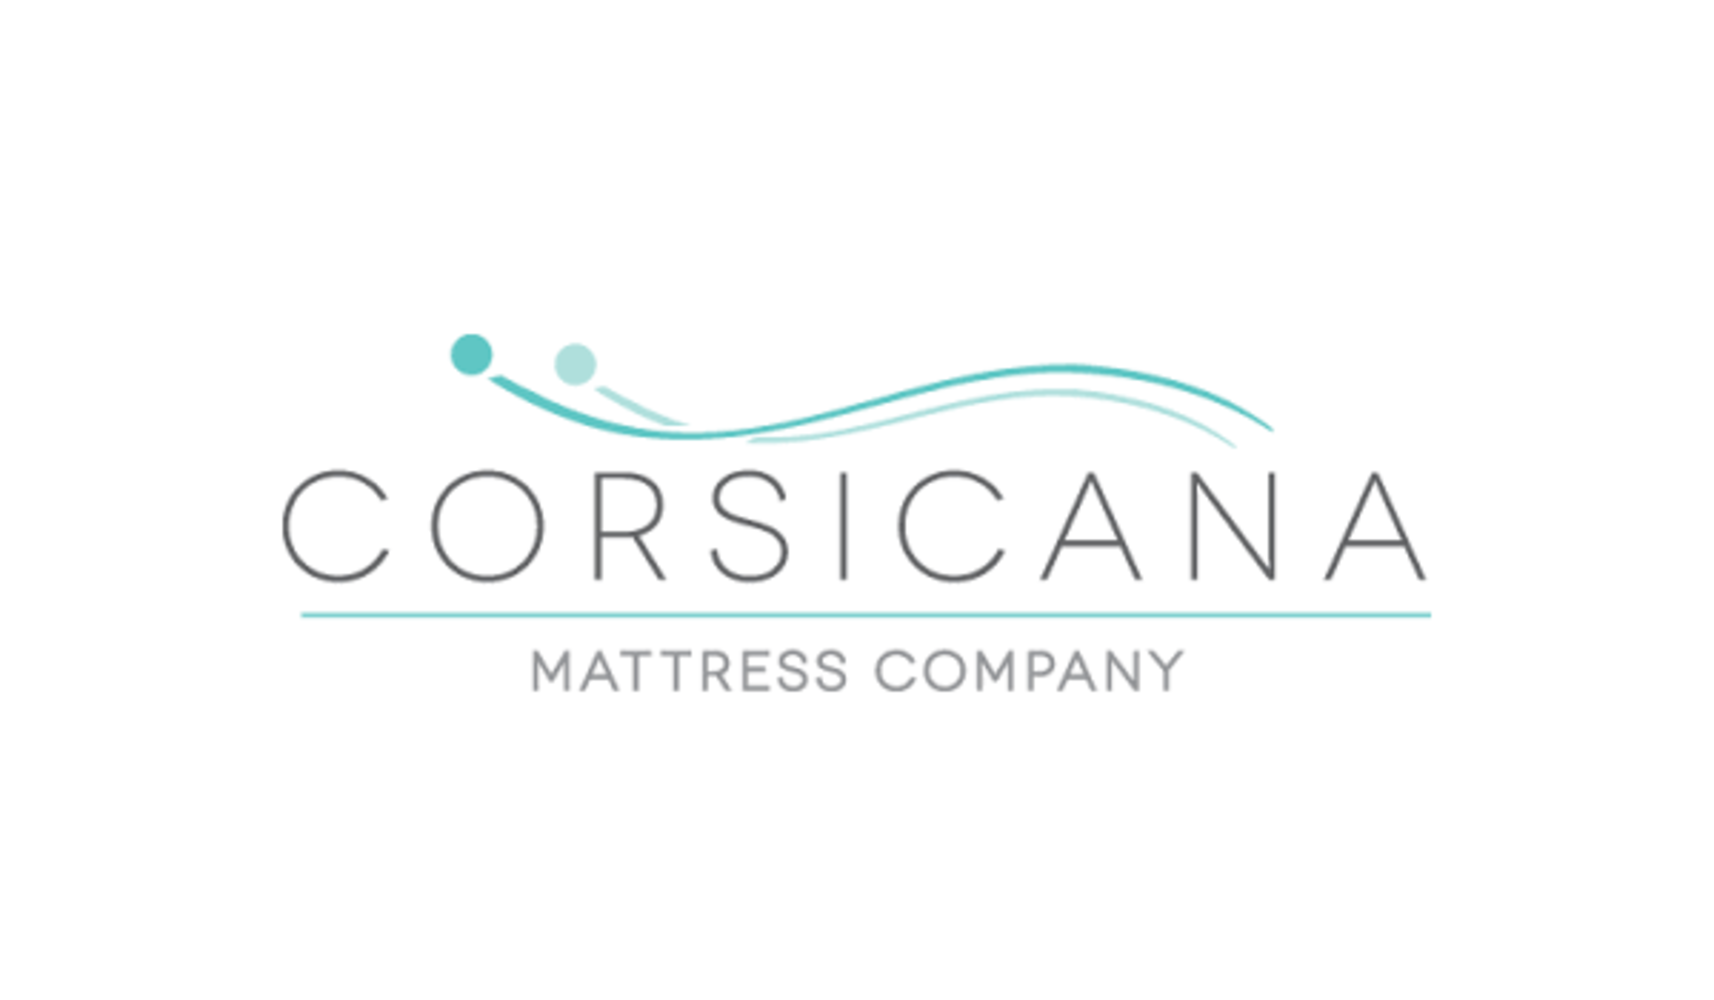 Assets No Longer Needed for Corsicana Bedding – Major Manufacturer of Multiple Mattress Lines